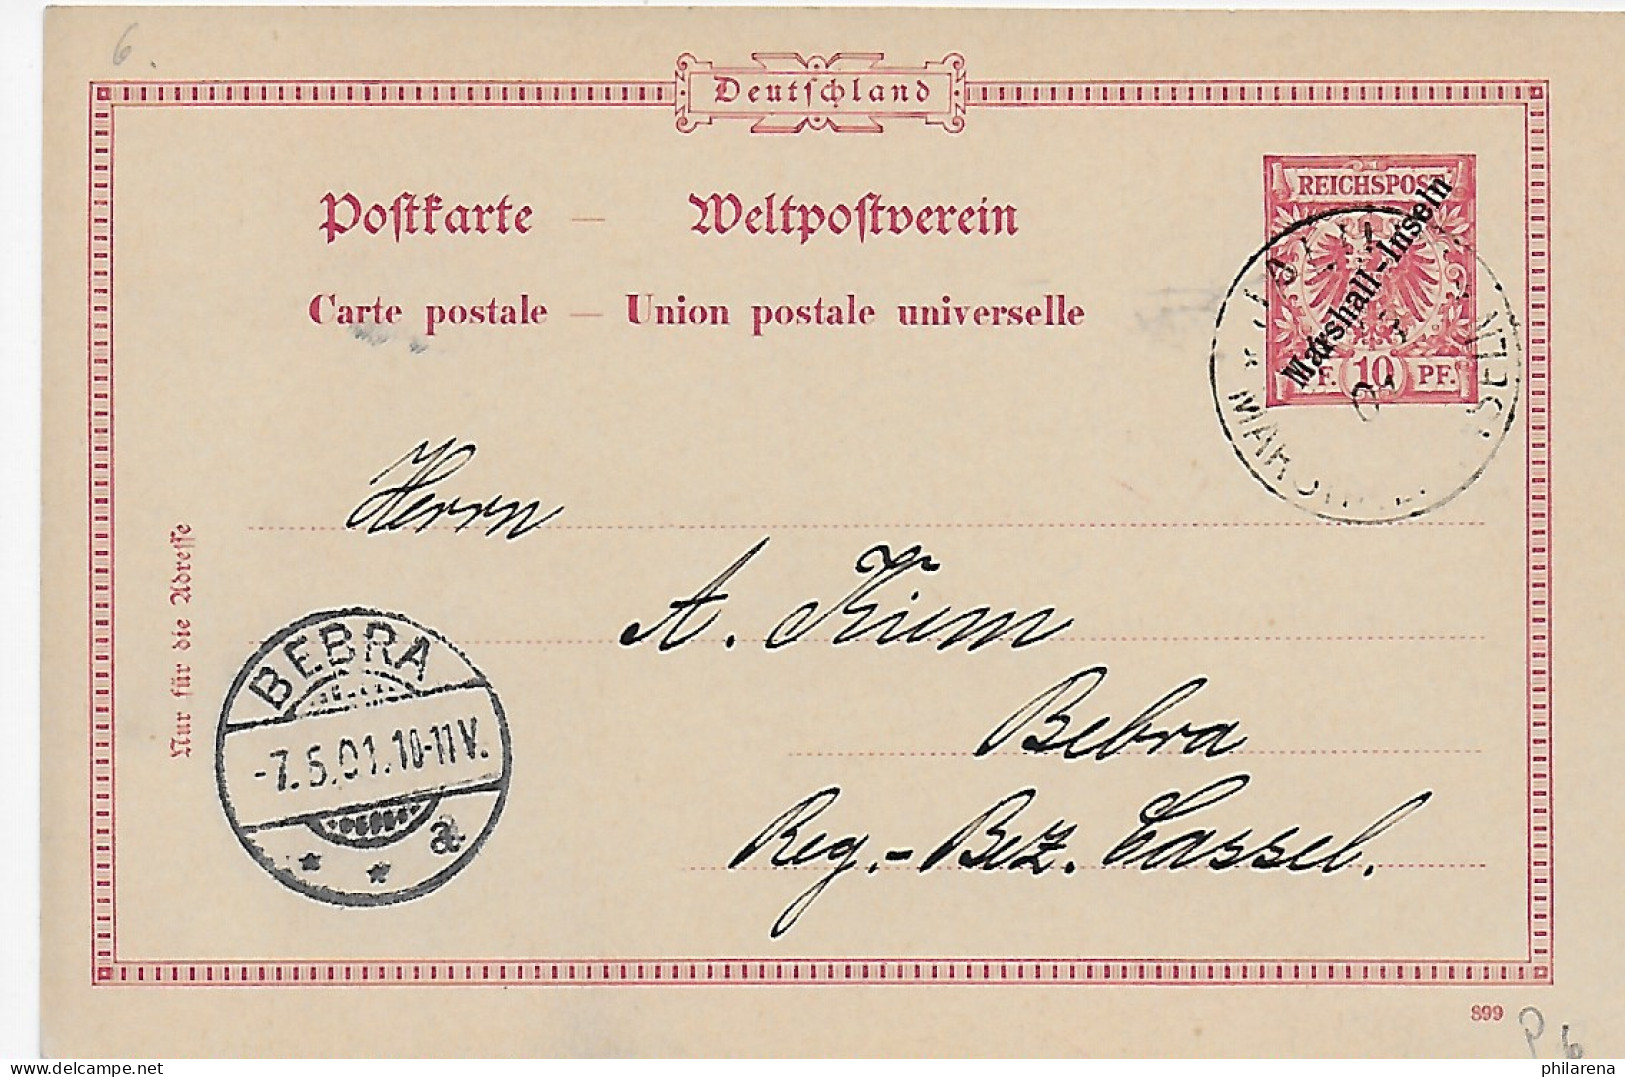 Ganzsache MiNr. D6, Jaluit Nach Bebra/Kassel, 1906, Rückseite Blanko - Marshall